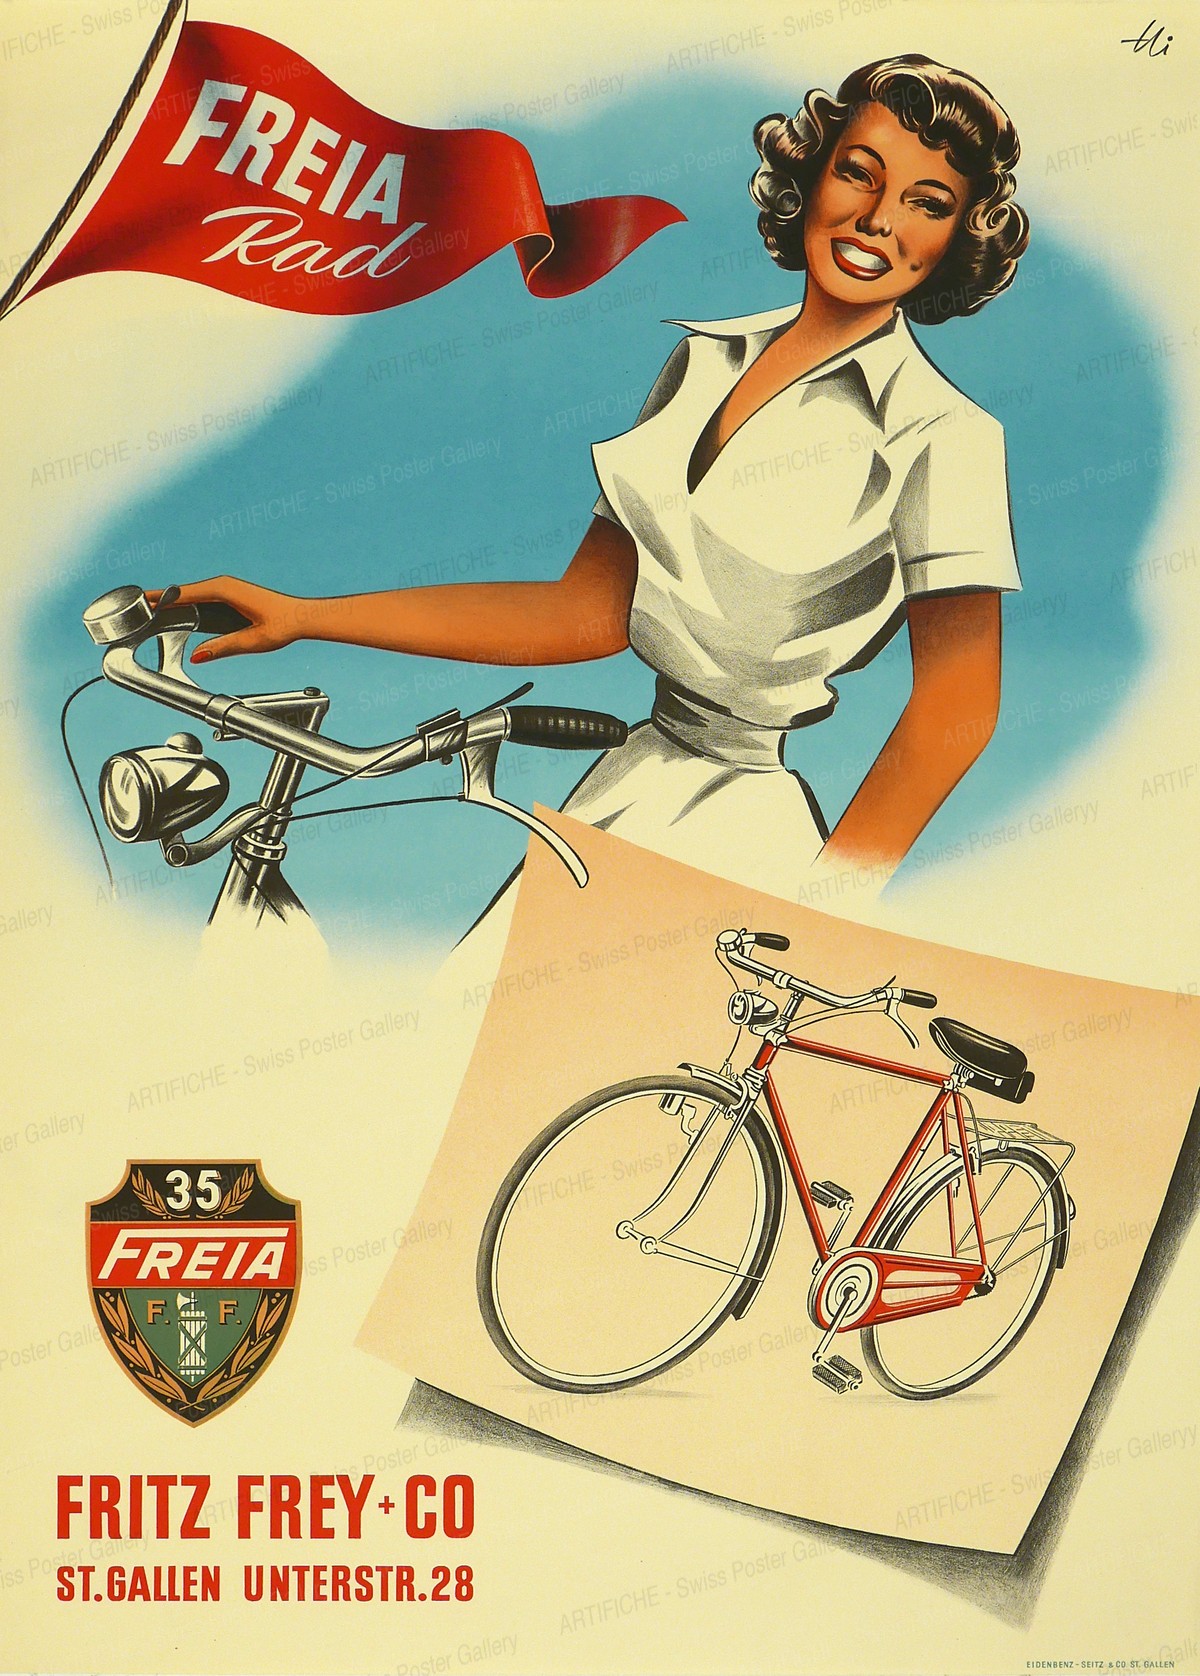 Fritz Frey + Co St. Gallen – Freia Bicycle, Artist unknown